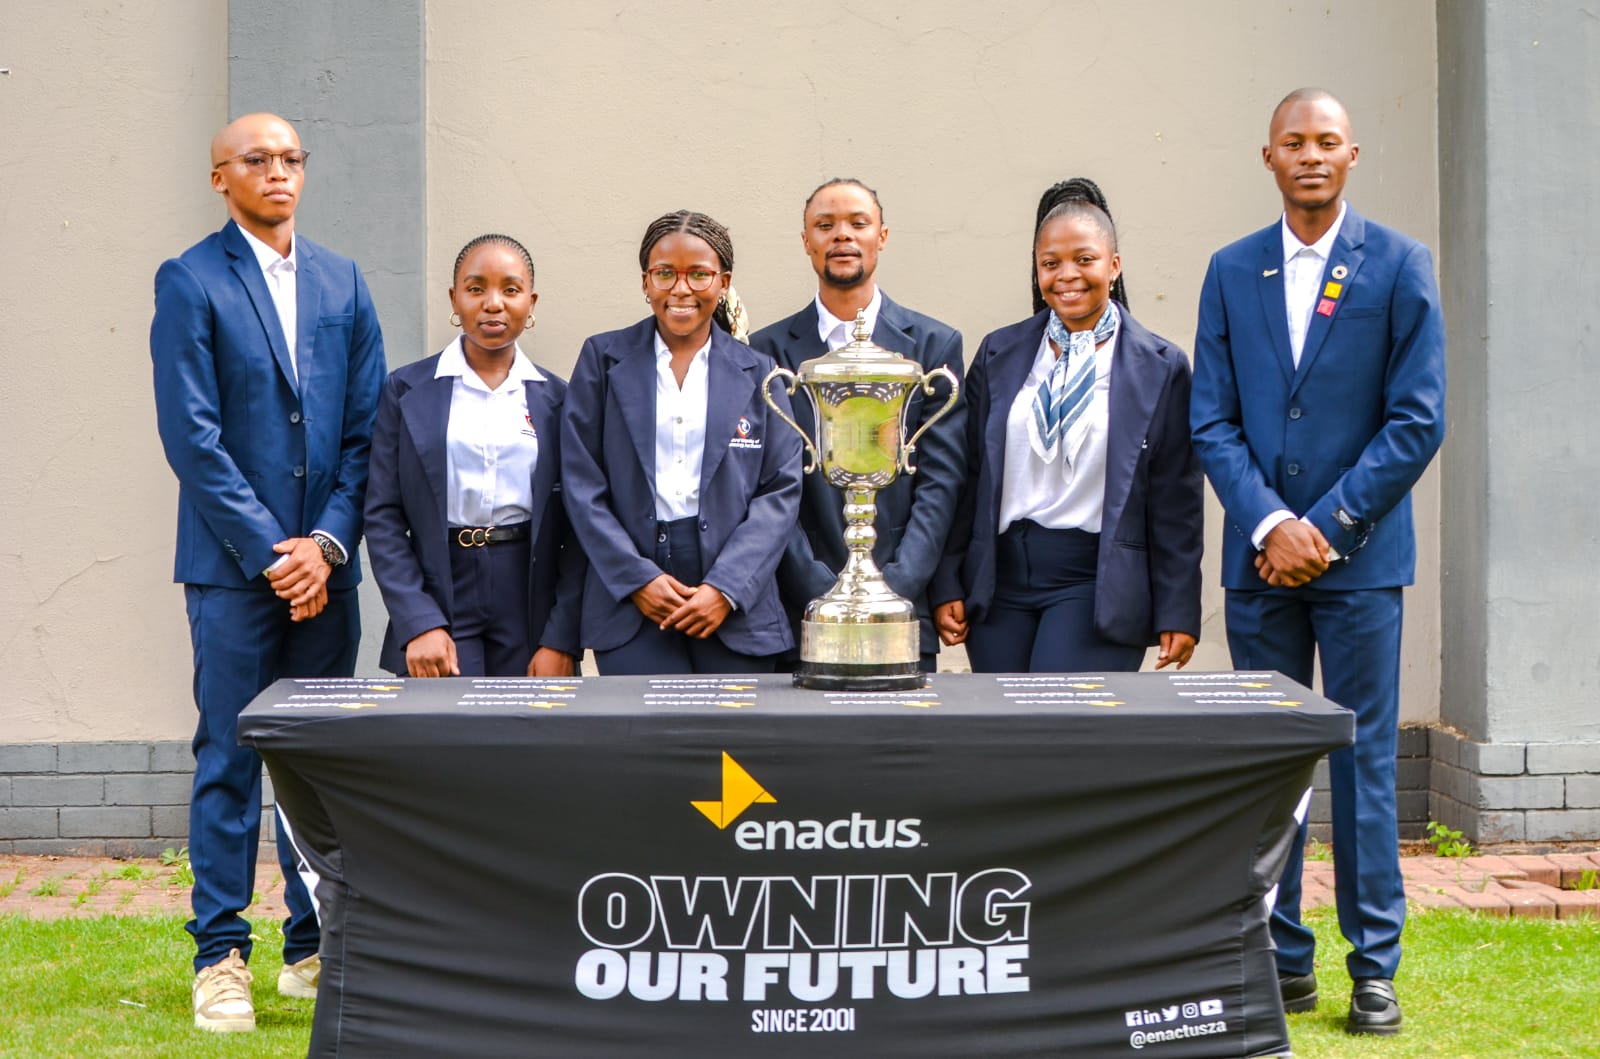 Enactus CUT crowned Enactus South Africa Summer Action Challenge Champions 